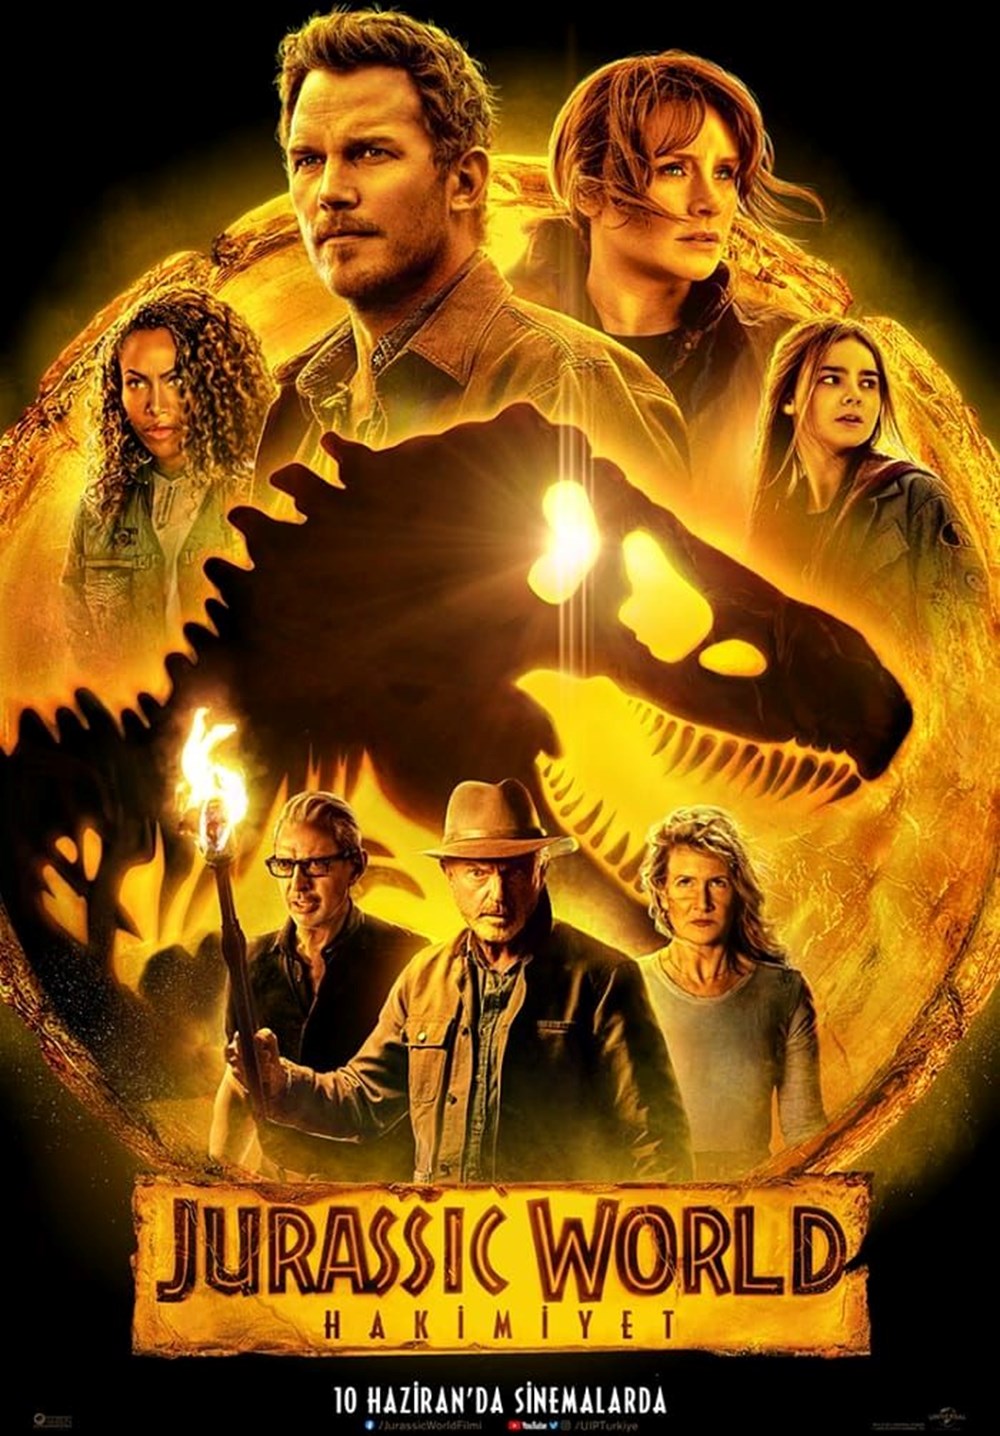 Jurassic World: Hakimiyet zirvede (10-12 Haziran 2022 ABD Box Office) - 10